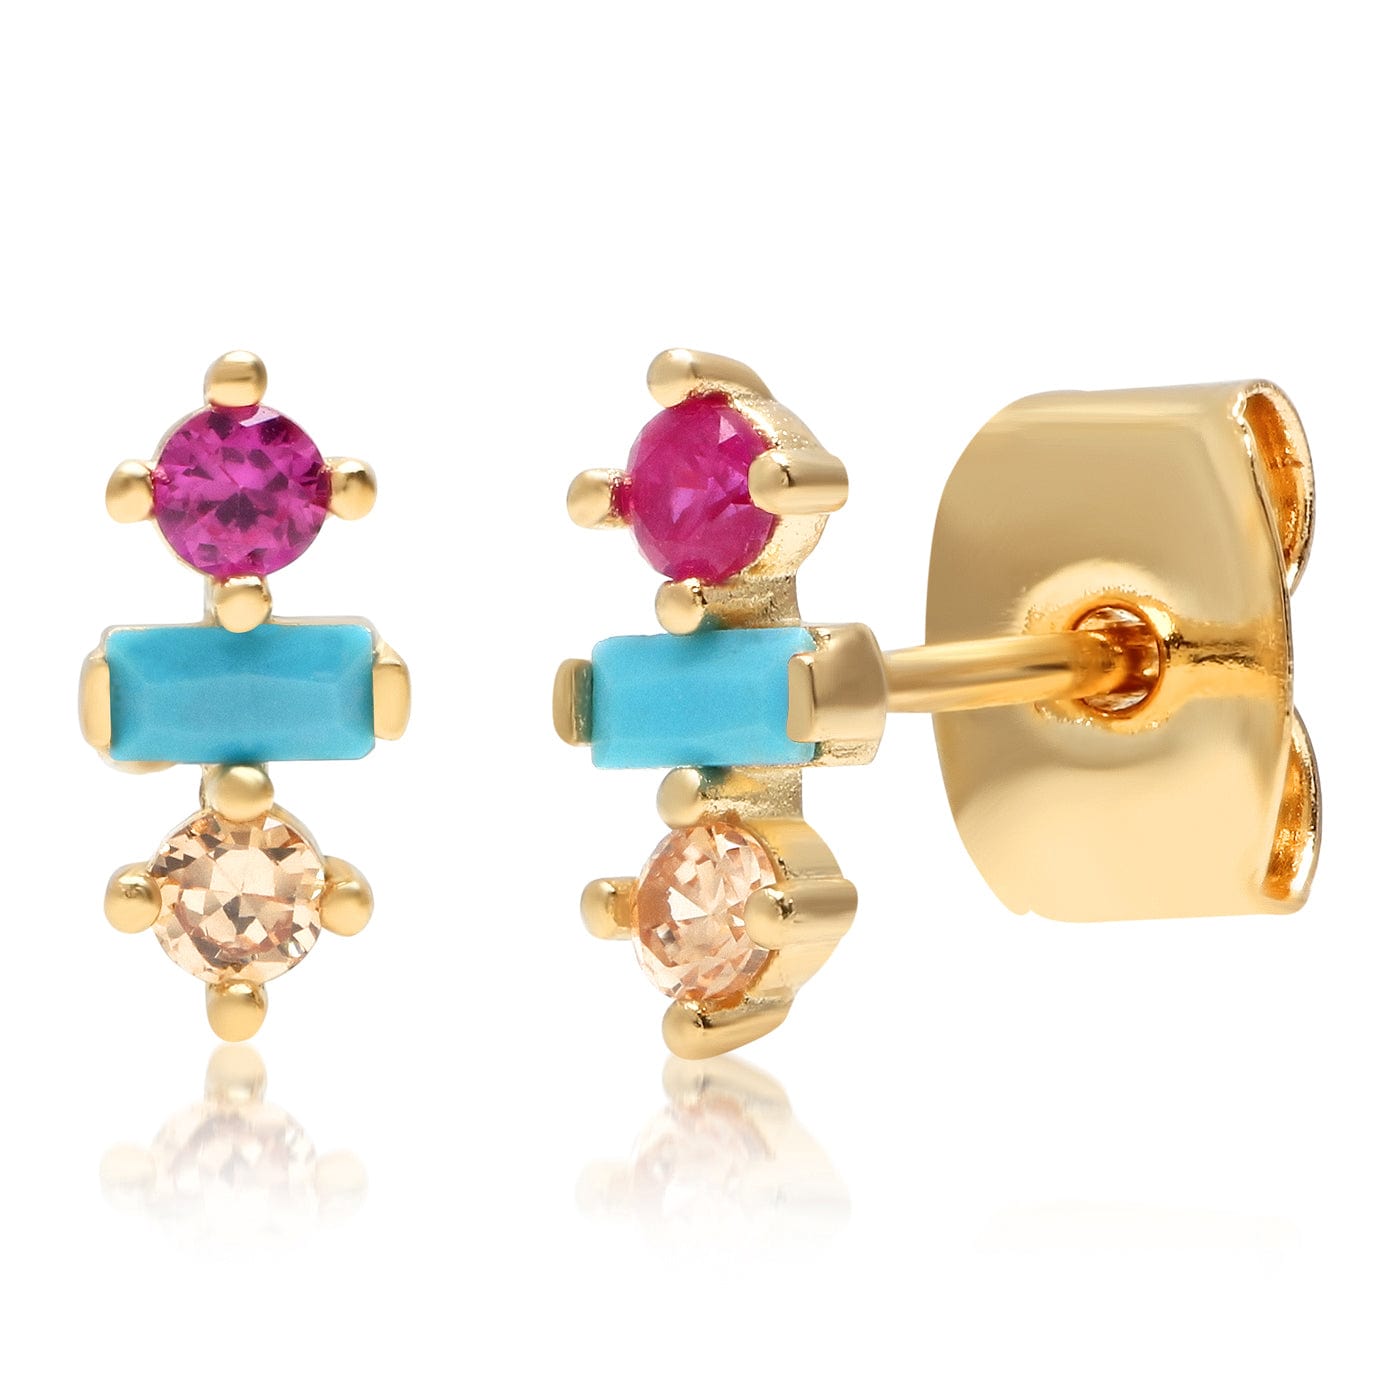 TAI JEWELRY Earrings Three Stone Turquoise & Cz Stud